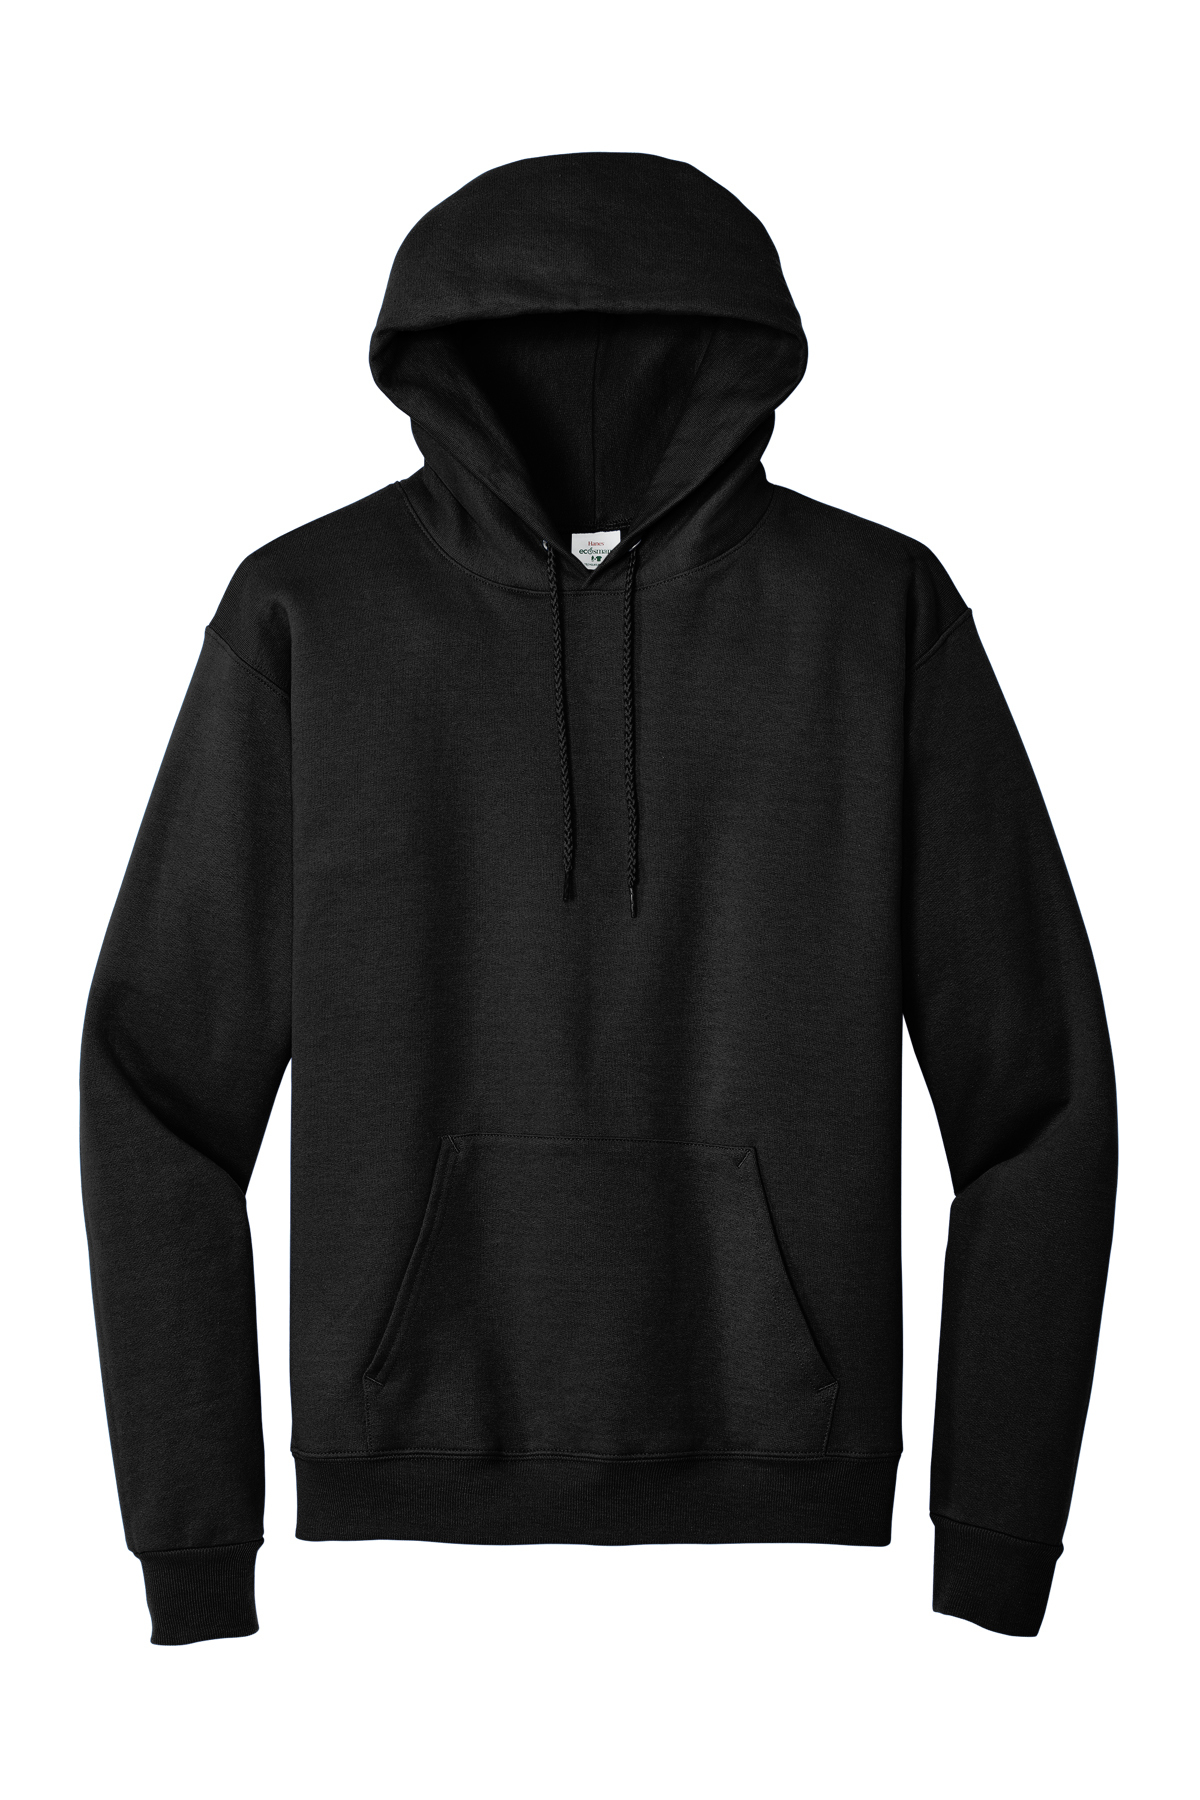 Hanes EcoSmart - Pullover Hooded Sweatshirt | Product | Company Casuals